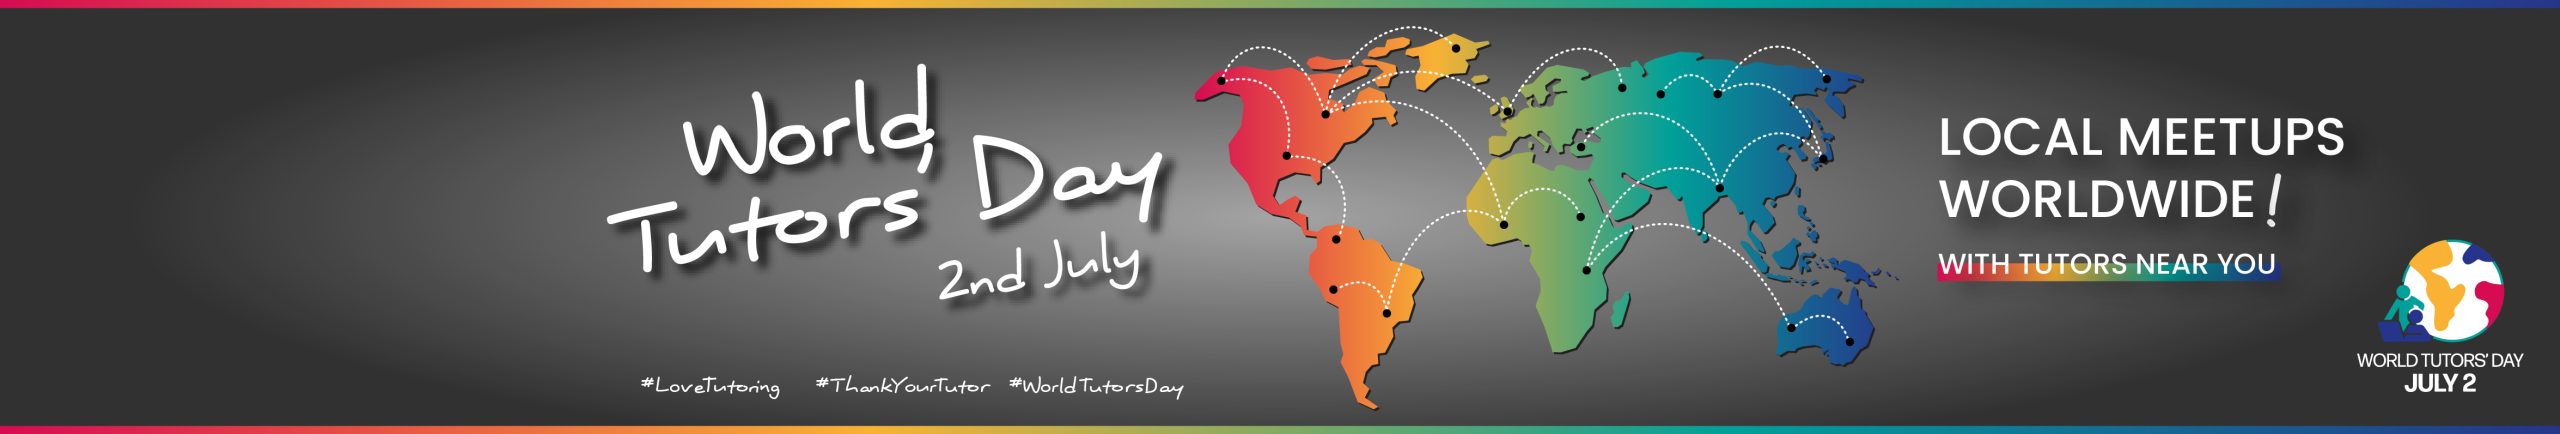 national days for tutors - World Tutors' Day July 2nd